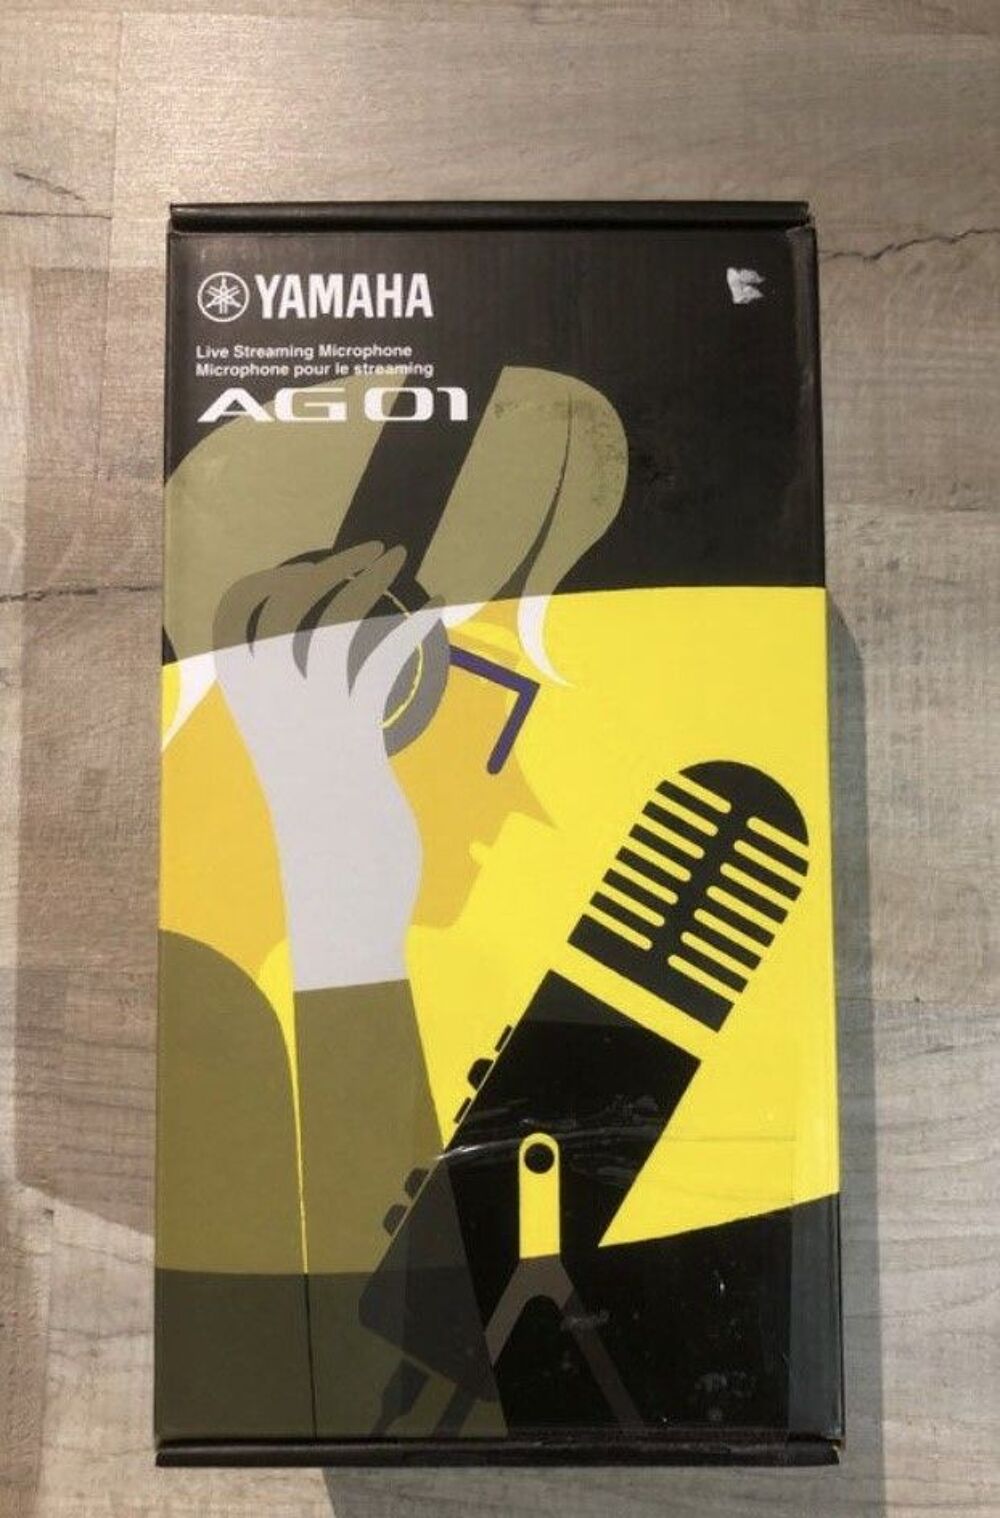 Microphone studio - Yamaha AG01 Audio et hifi